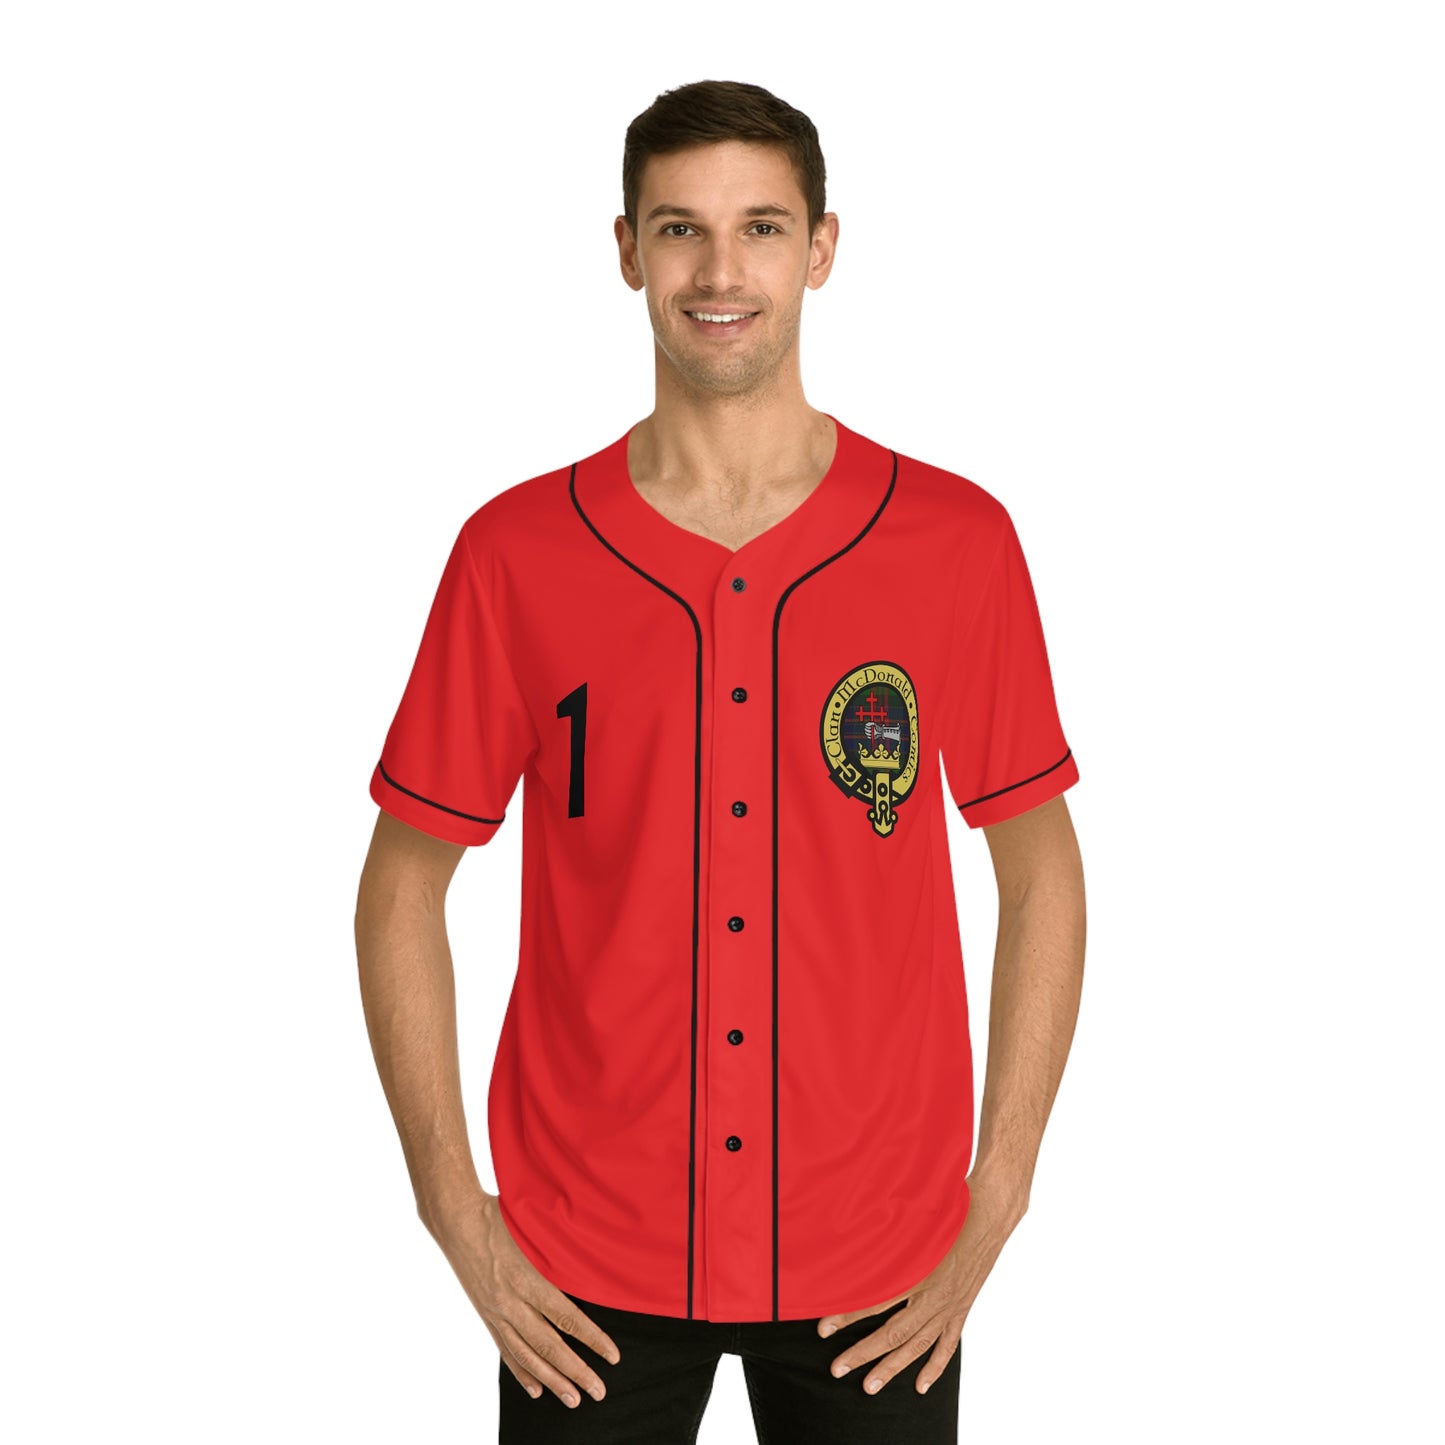 Clan McDonald Comics Men's Baseball Jersey - Red/Black